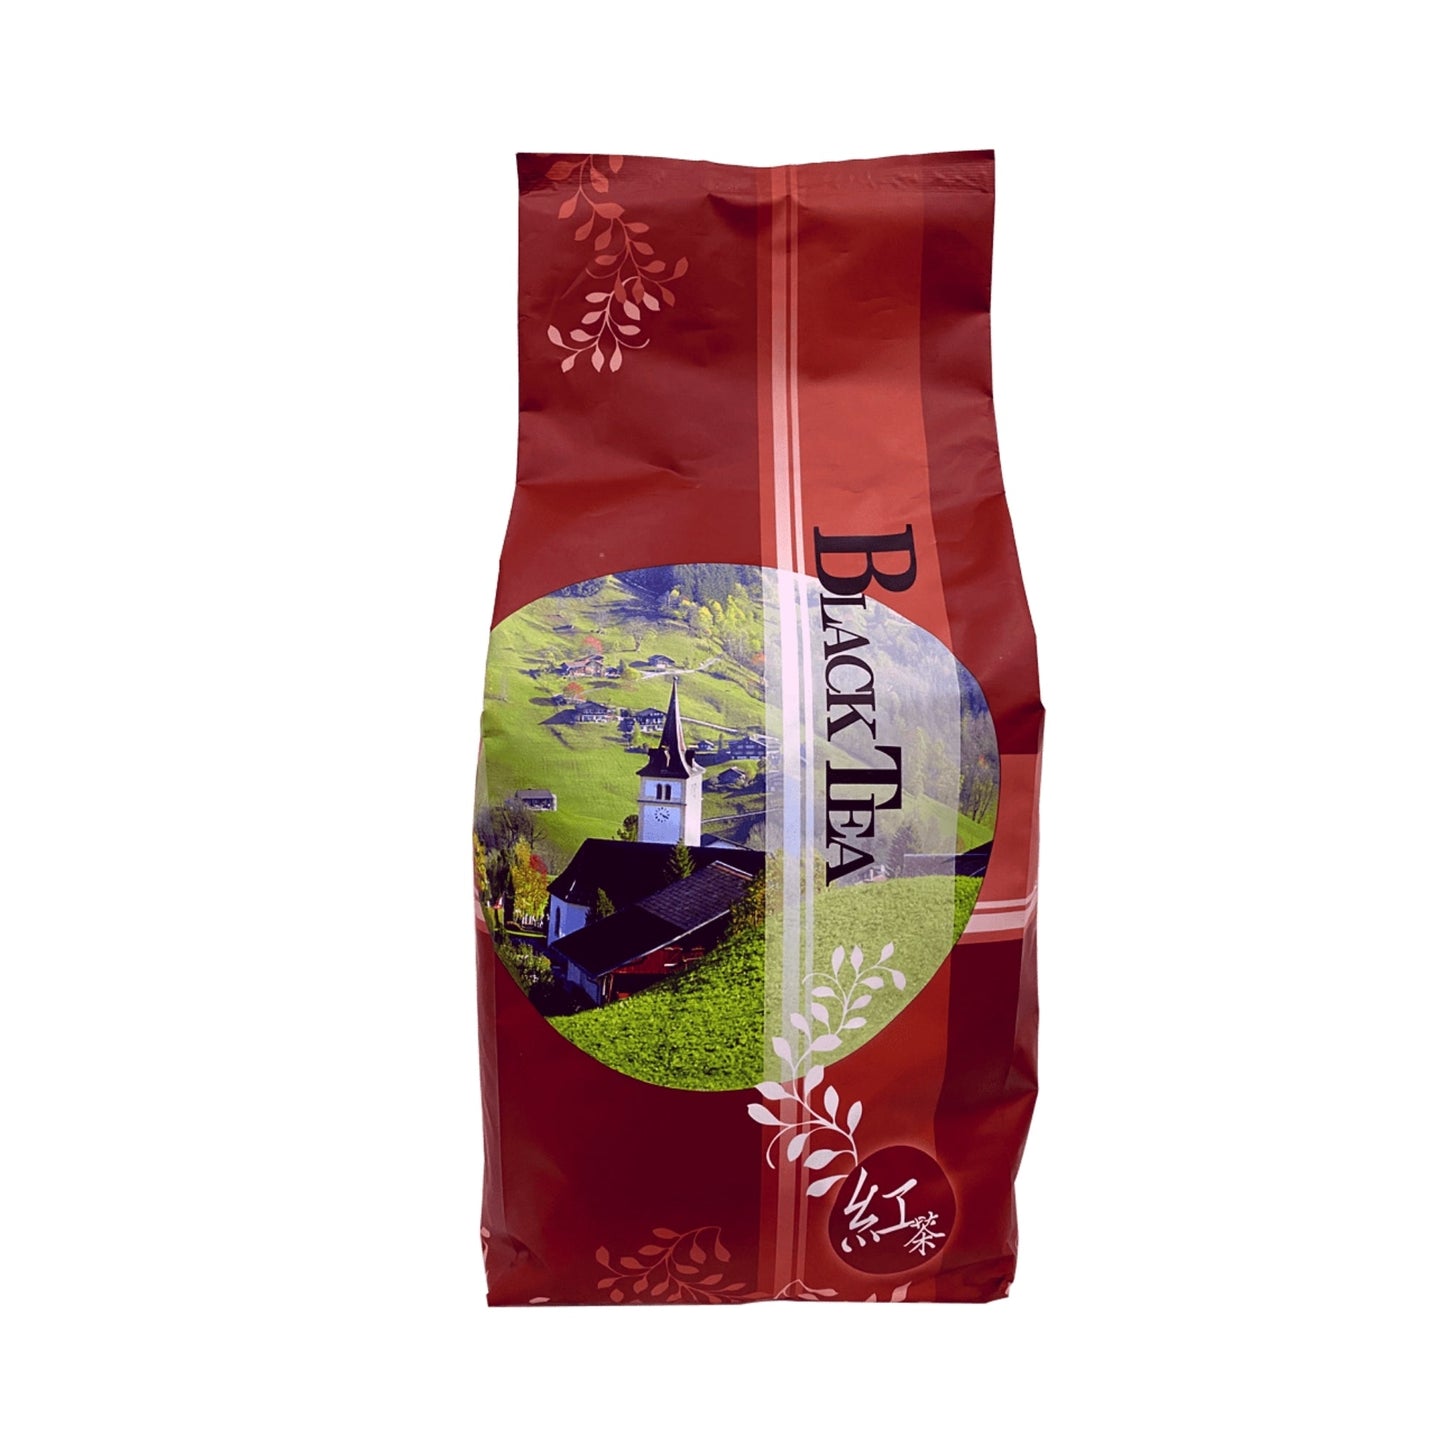 TOP Creamery Sun Moon Lake Black Tea 600g - Kreme City Supplies